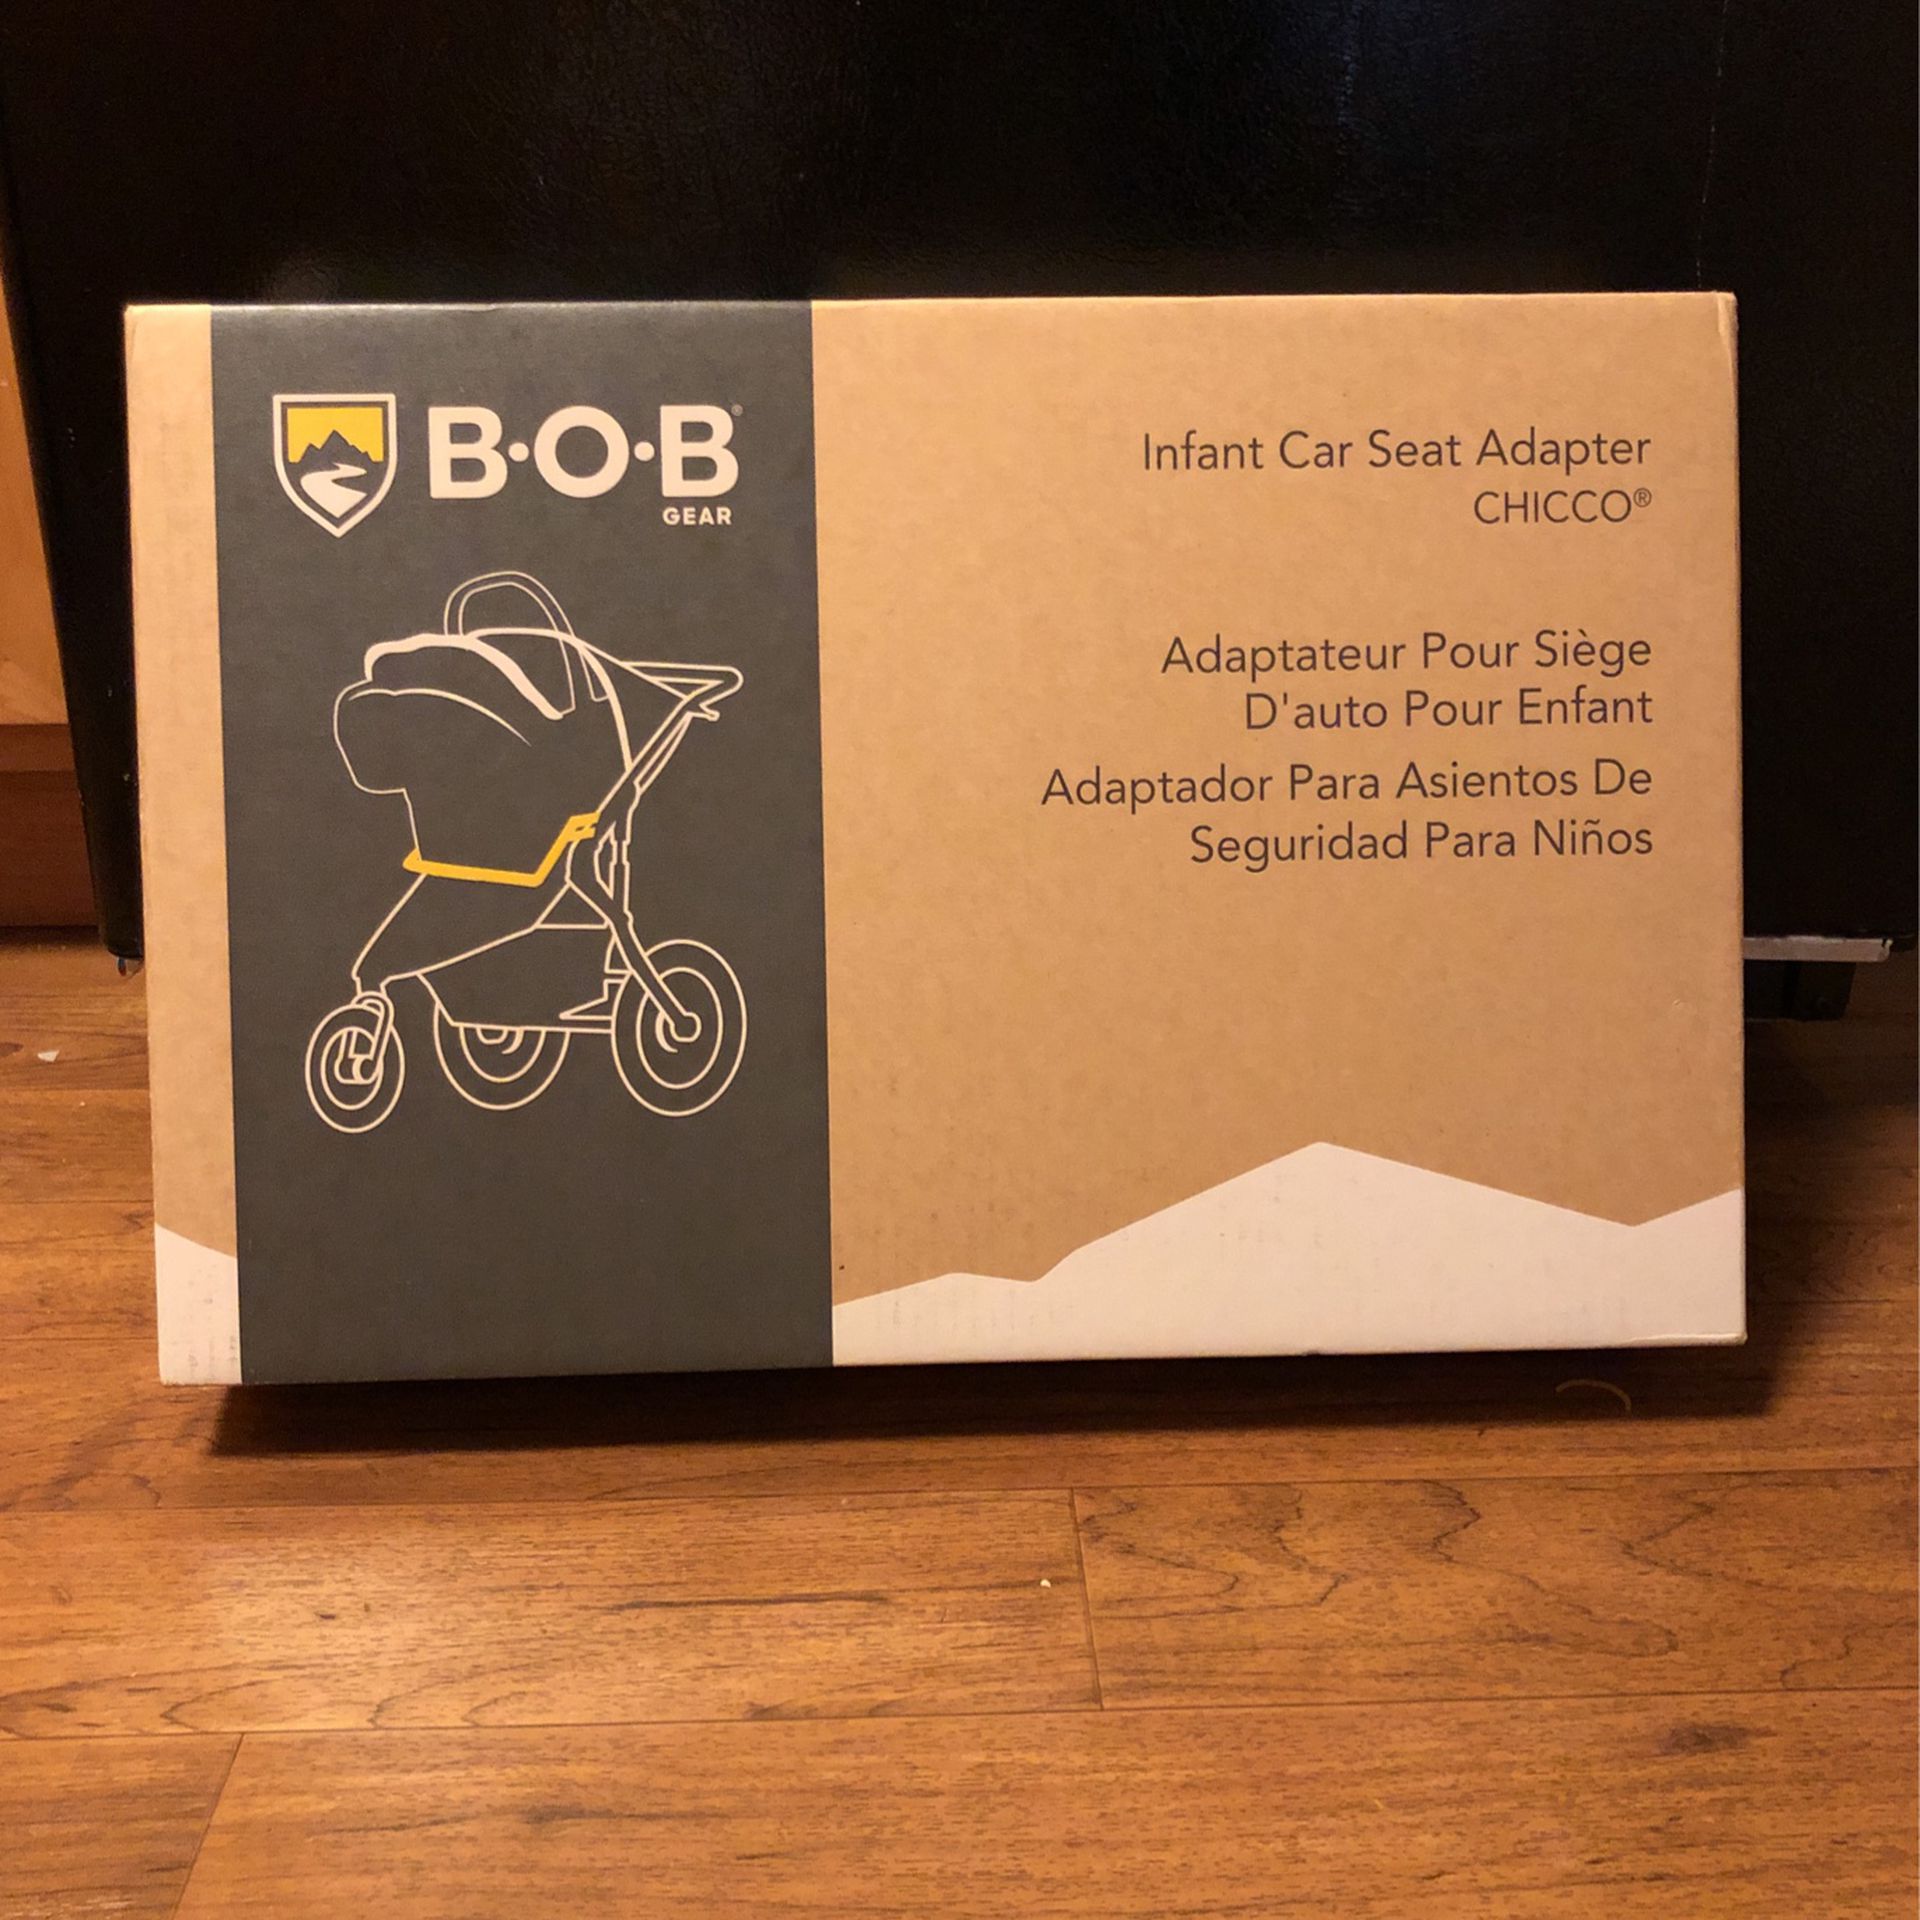 BO.B Infant Car Seat Adapter -NEW still In Box Retail $90